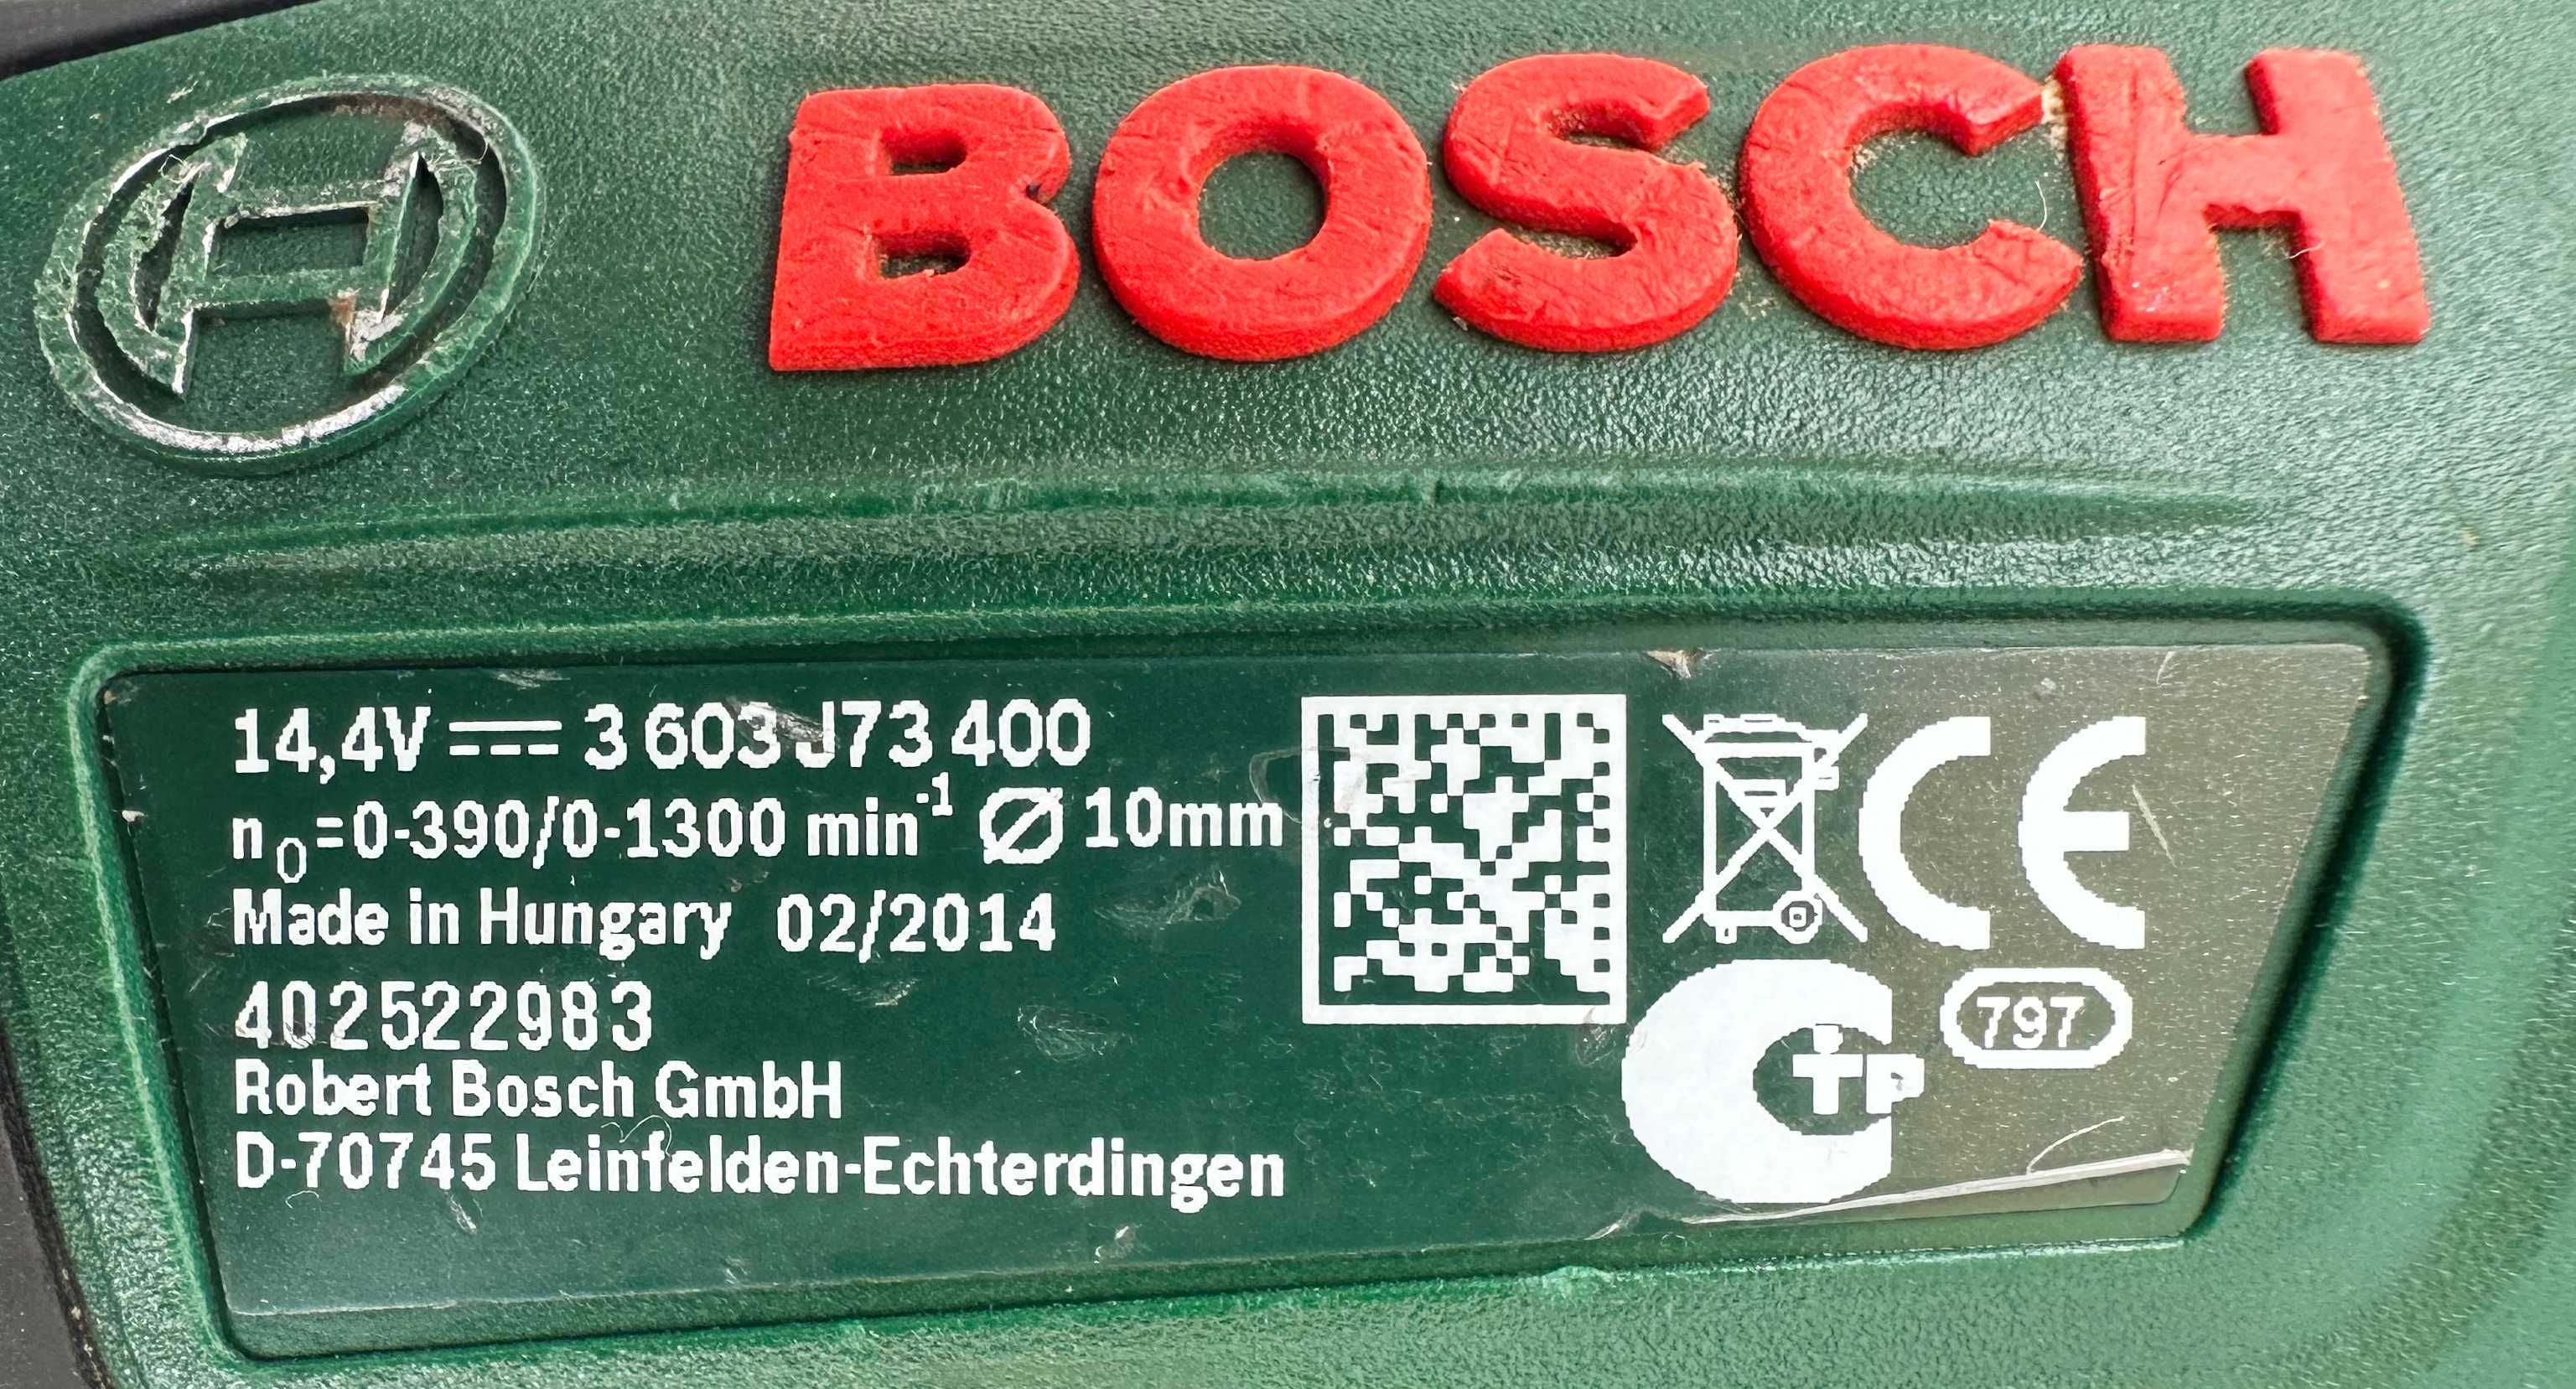 Bosch PSR 144 Li-8 - Akумулаторен винтоверт 14.4V